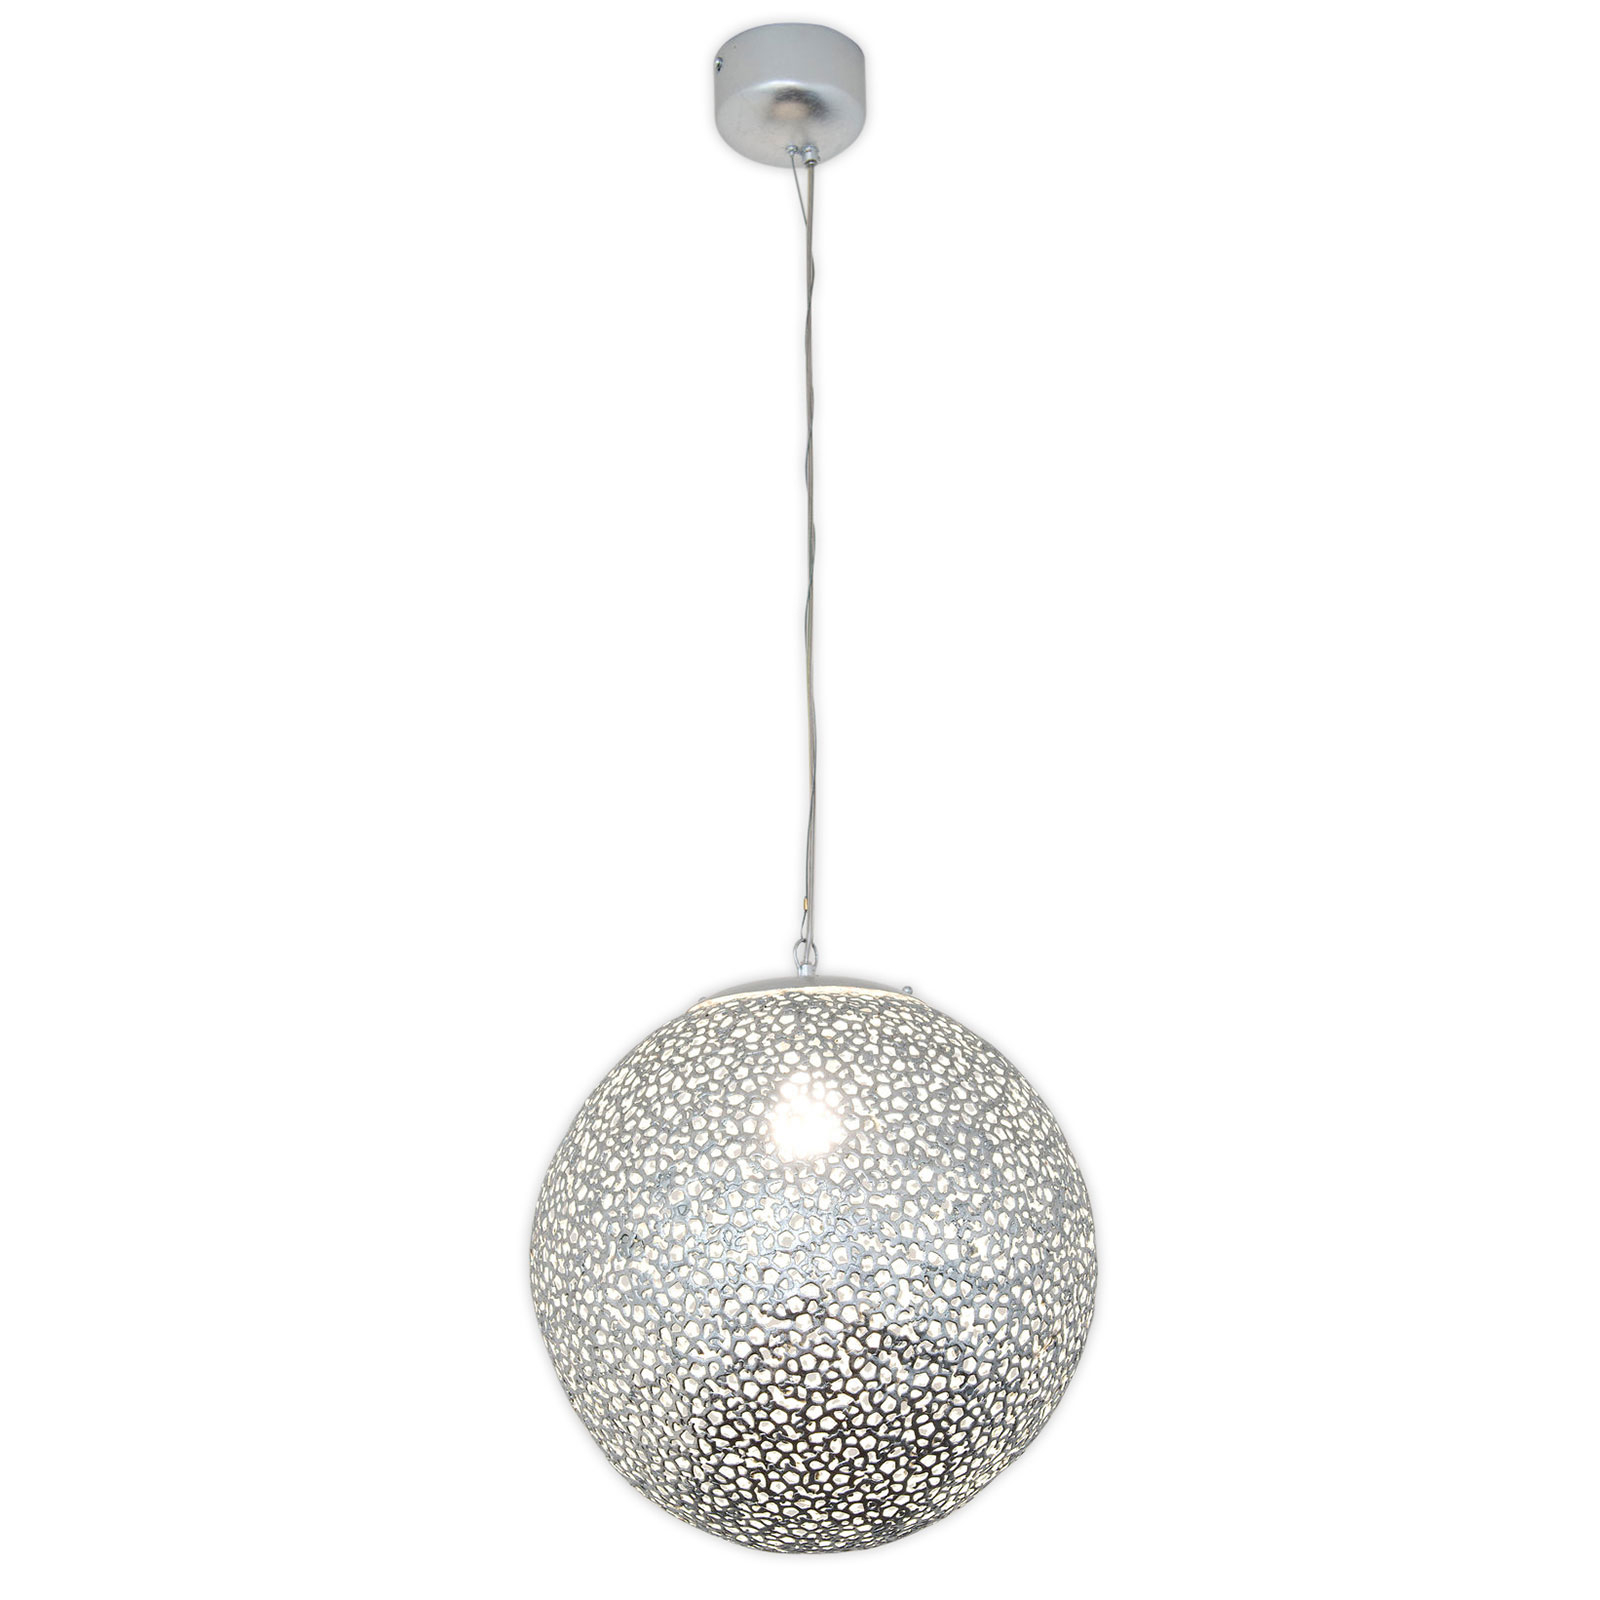 Hanglamp Utopistico in zilver Ø 40 cm